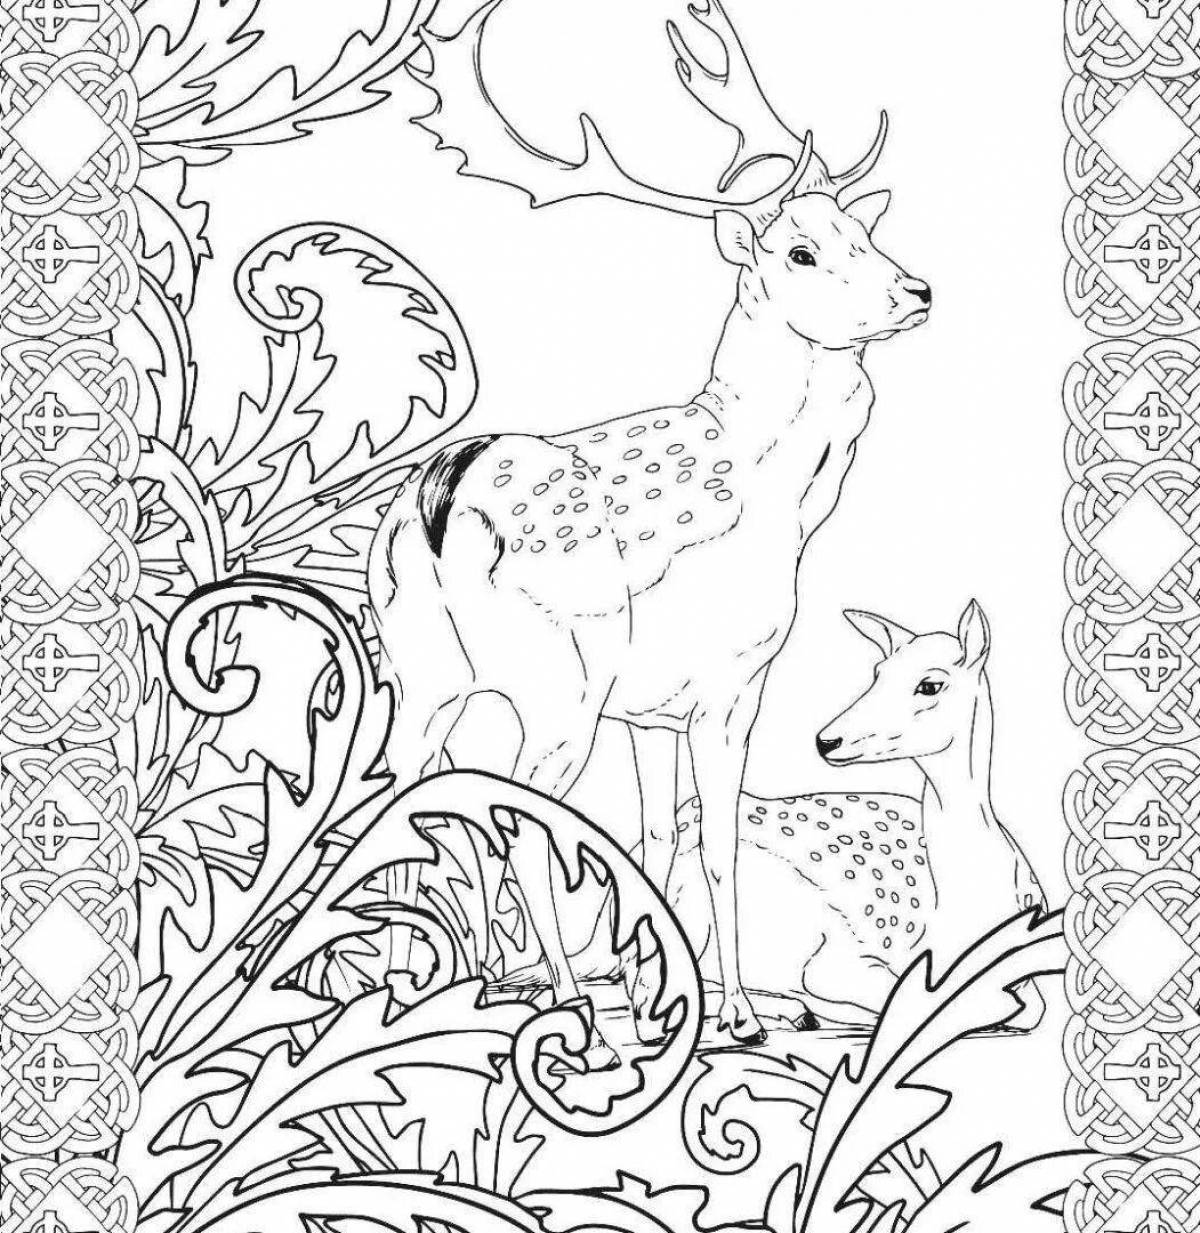 Joyful Russian animal coloring book